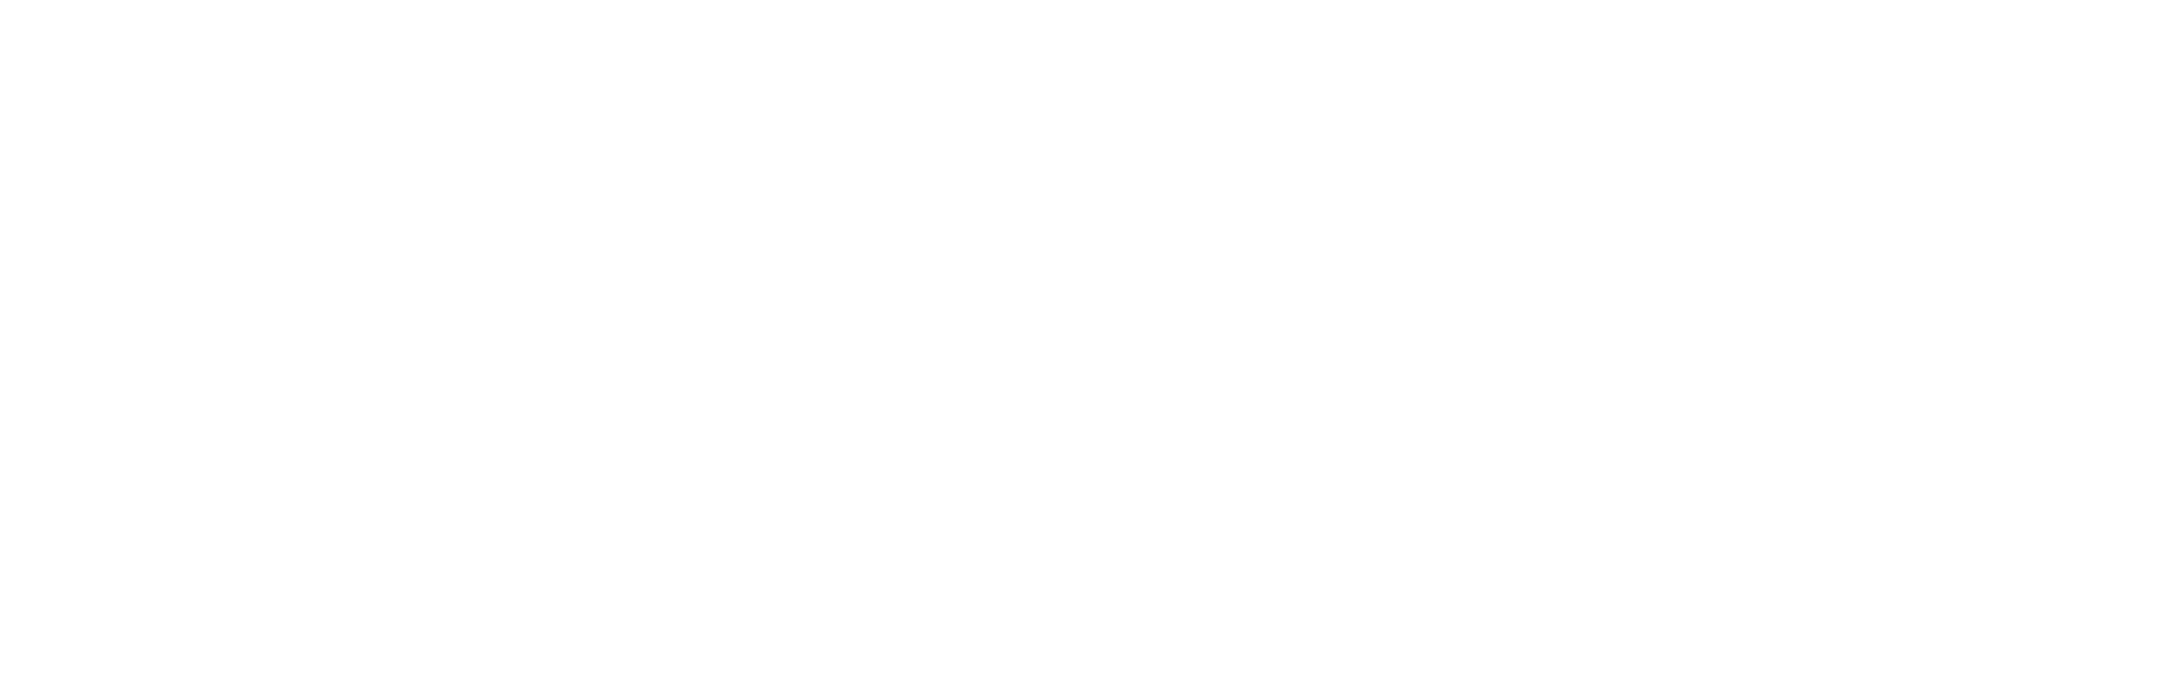 Poppycocks Cafe